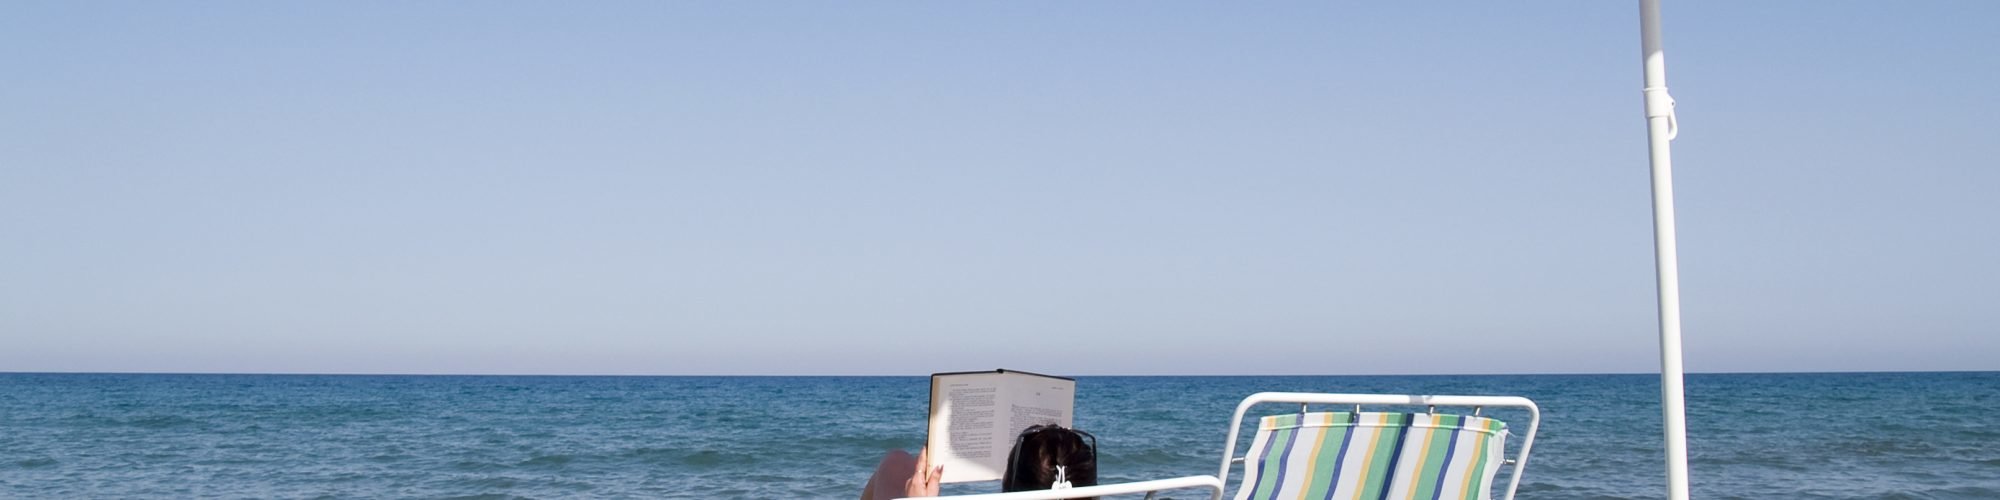 woman reading a book on the beach under umbrella